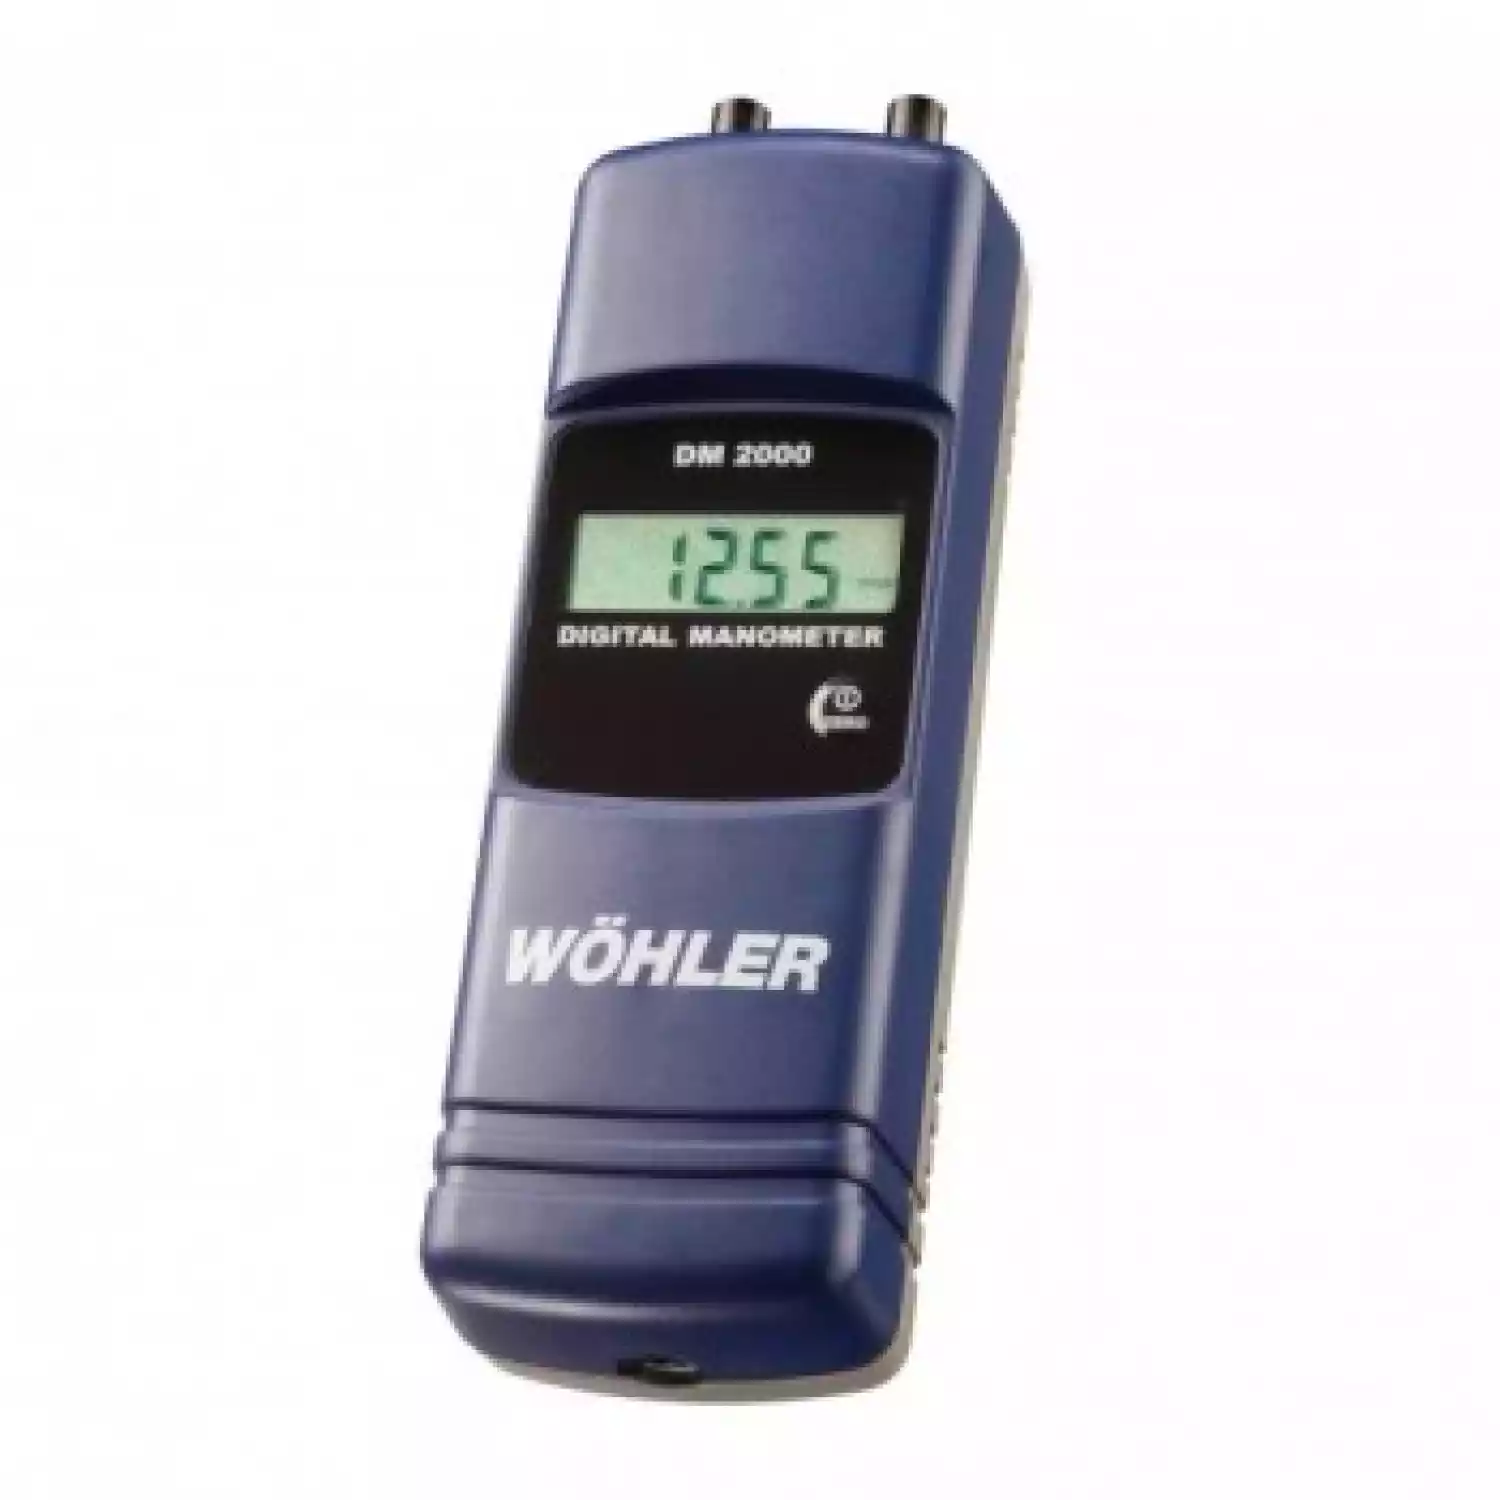 Цифровой манометр WÖHLER DM 2000 - 1